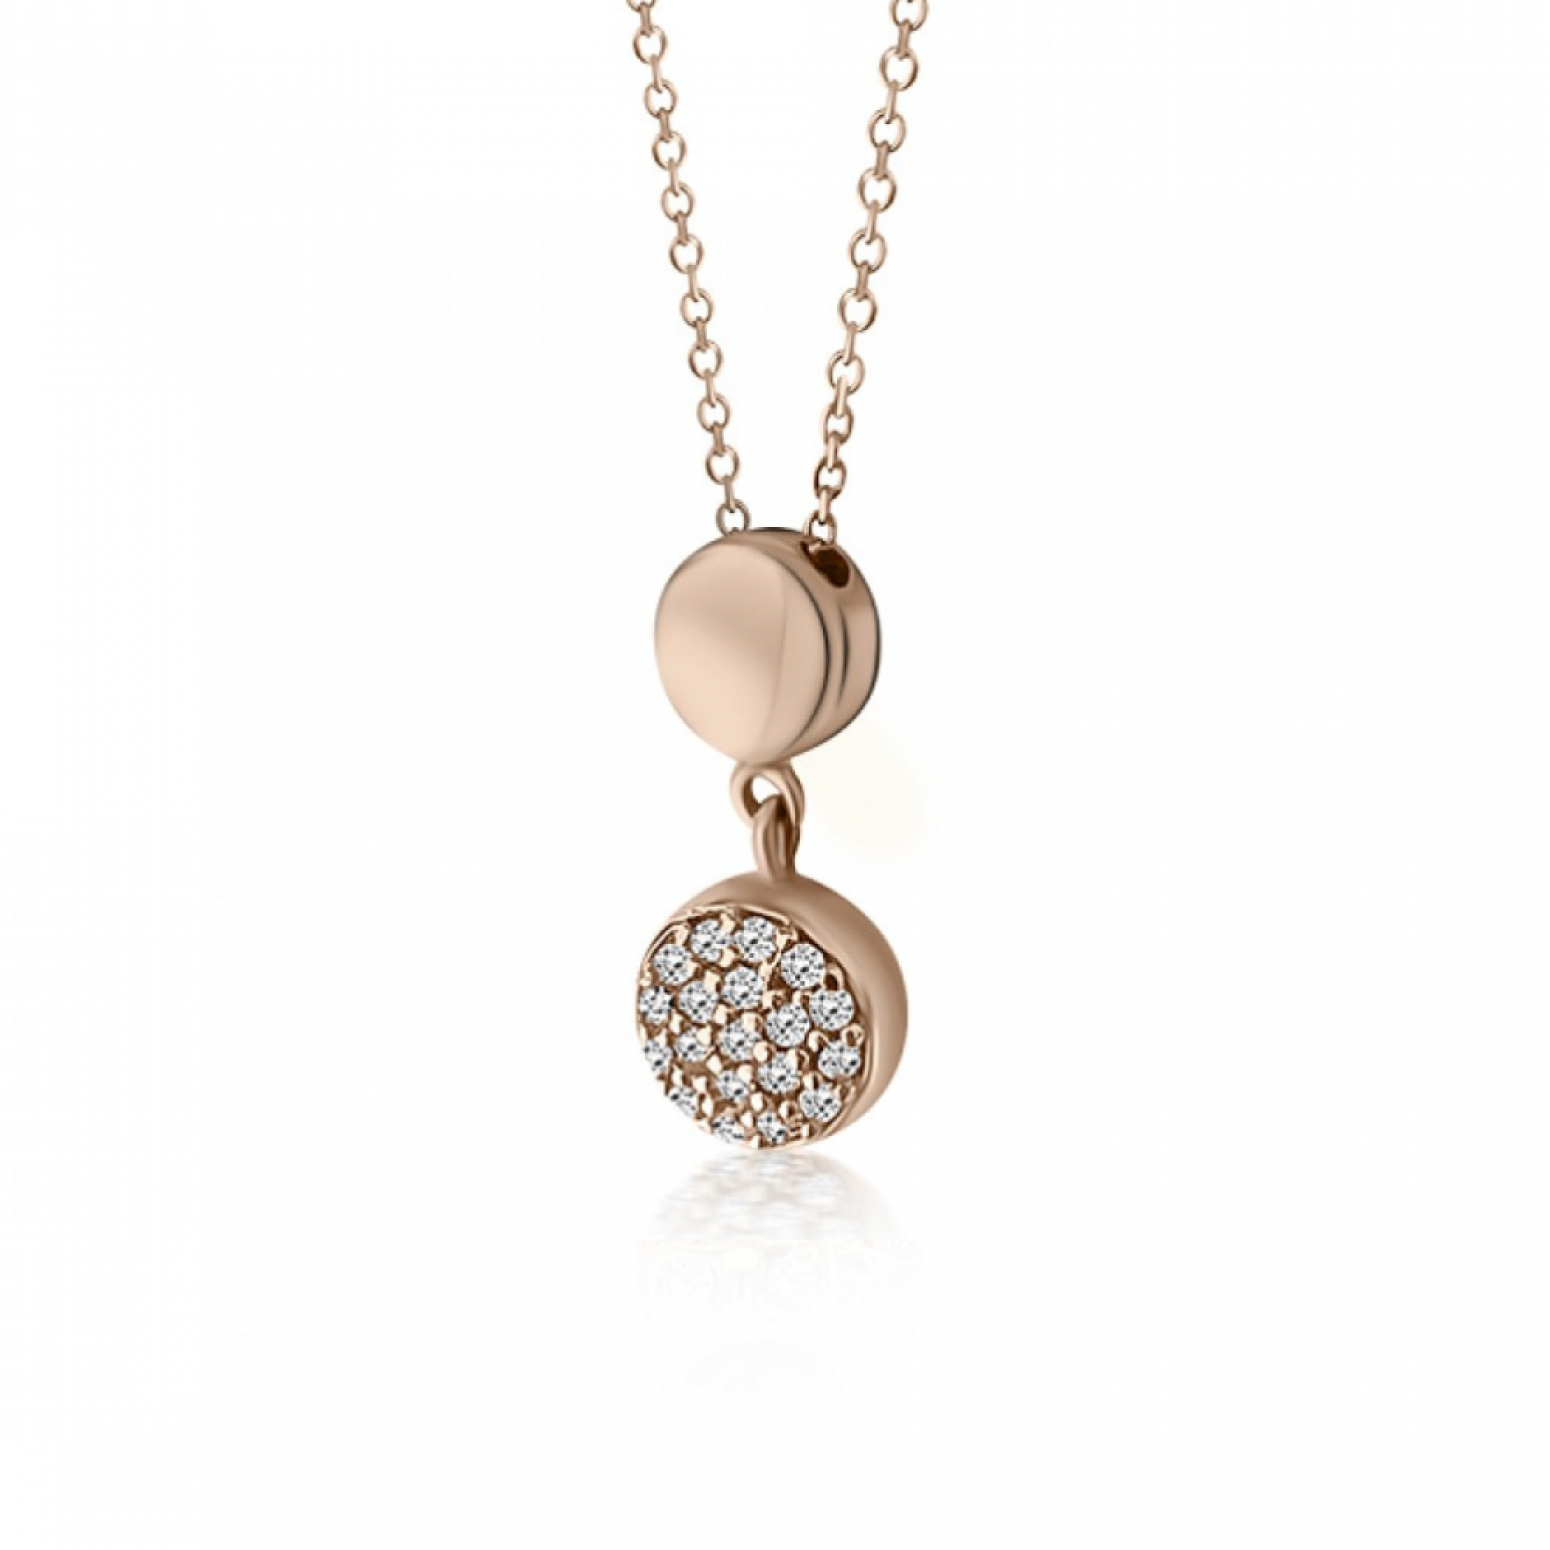 Round necklace, Κ14 pink gold with zircon, ko4748 NECKLACES Κοσμηματα - chrilia.gr